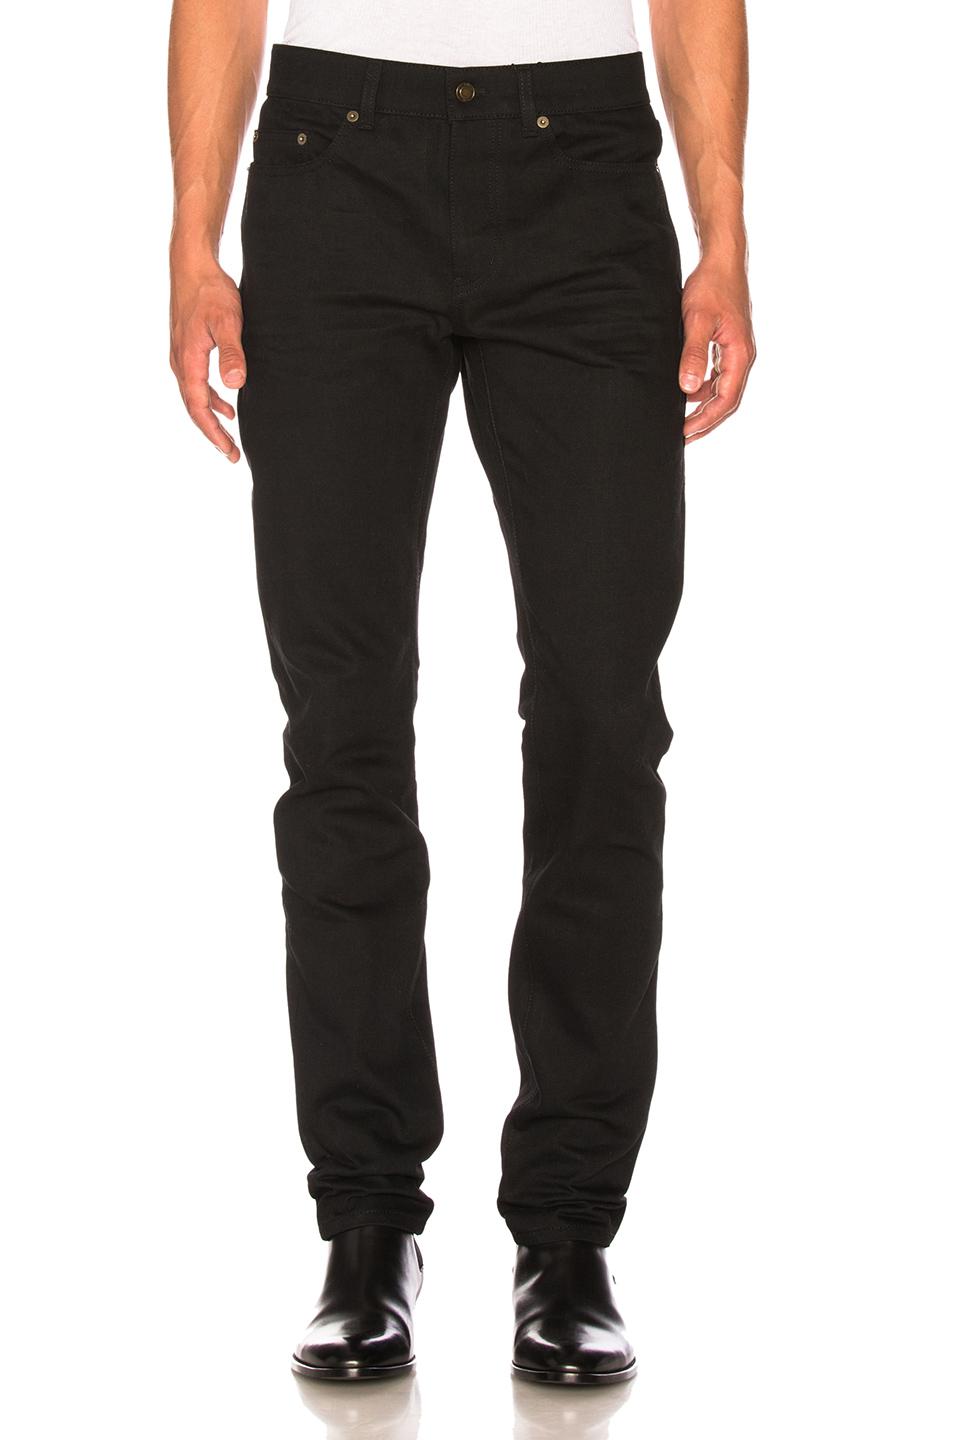 Lyst - Saint Laurent Low Rise Skinny Jeans in Black for Men